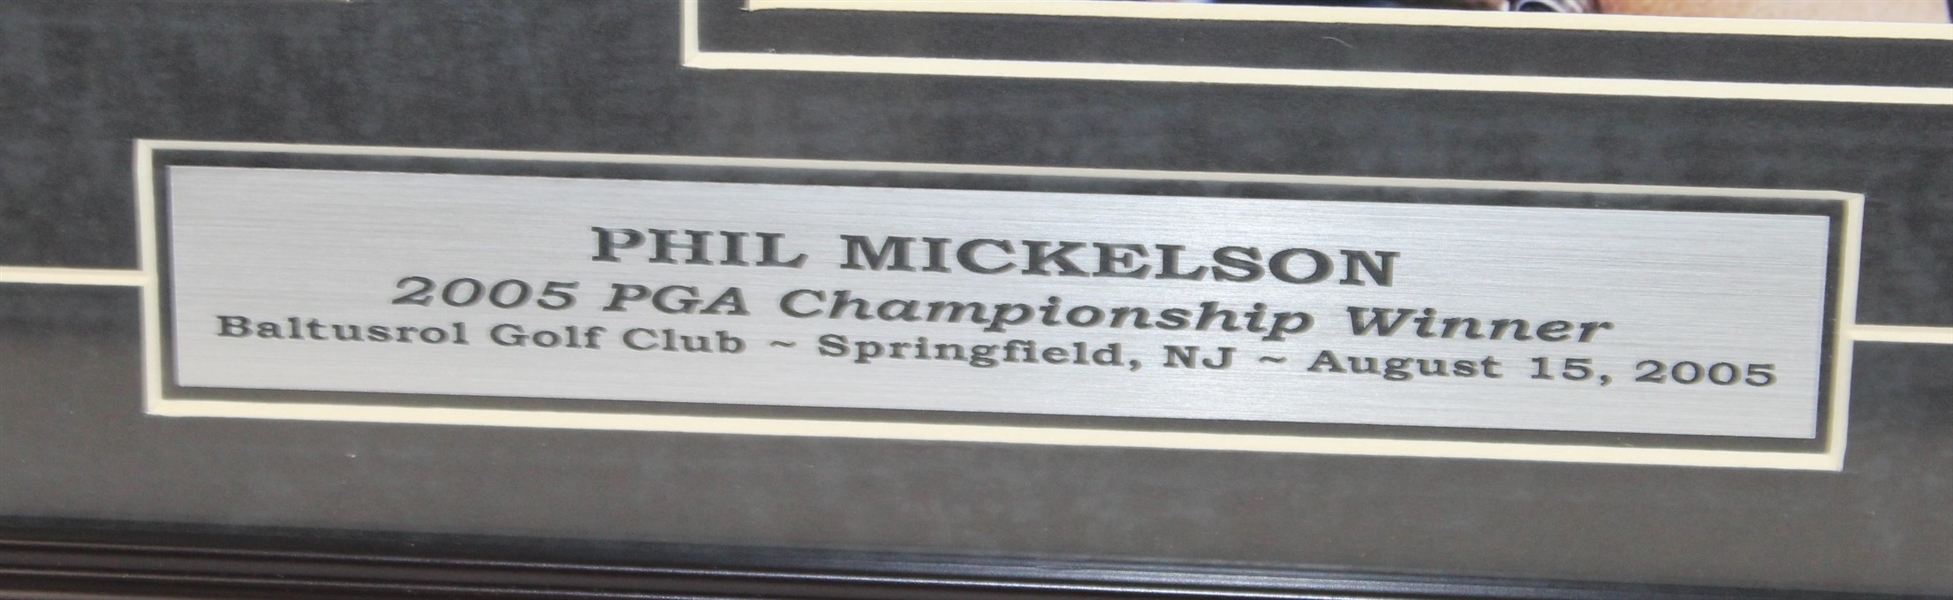 Phil Mickelson 2005 PGA Championship at Baltusrol Display with Ticket & Photo - Framed